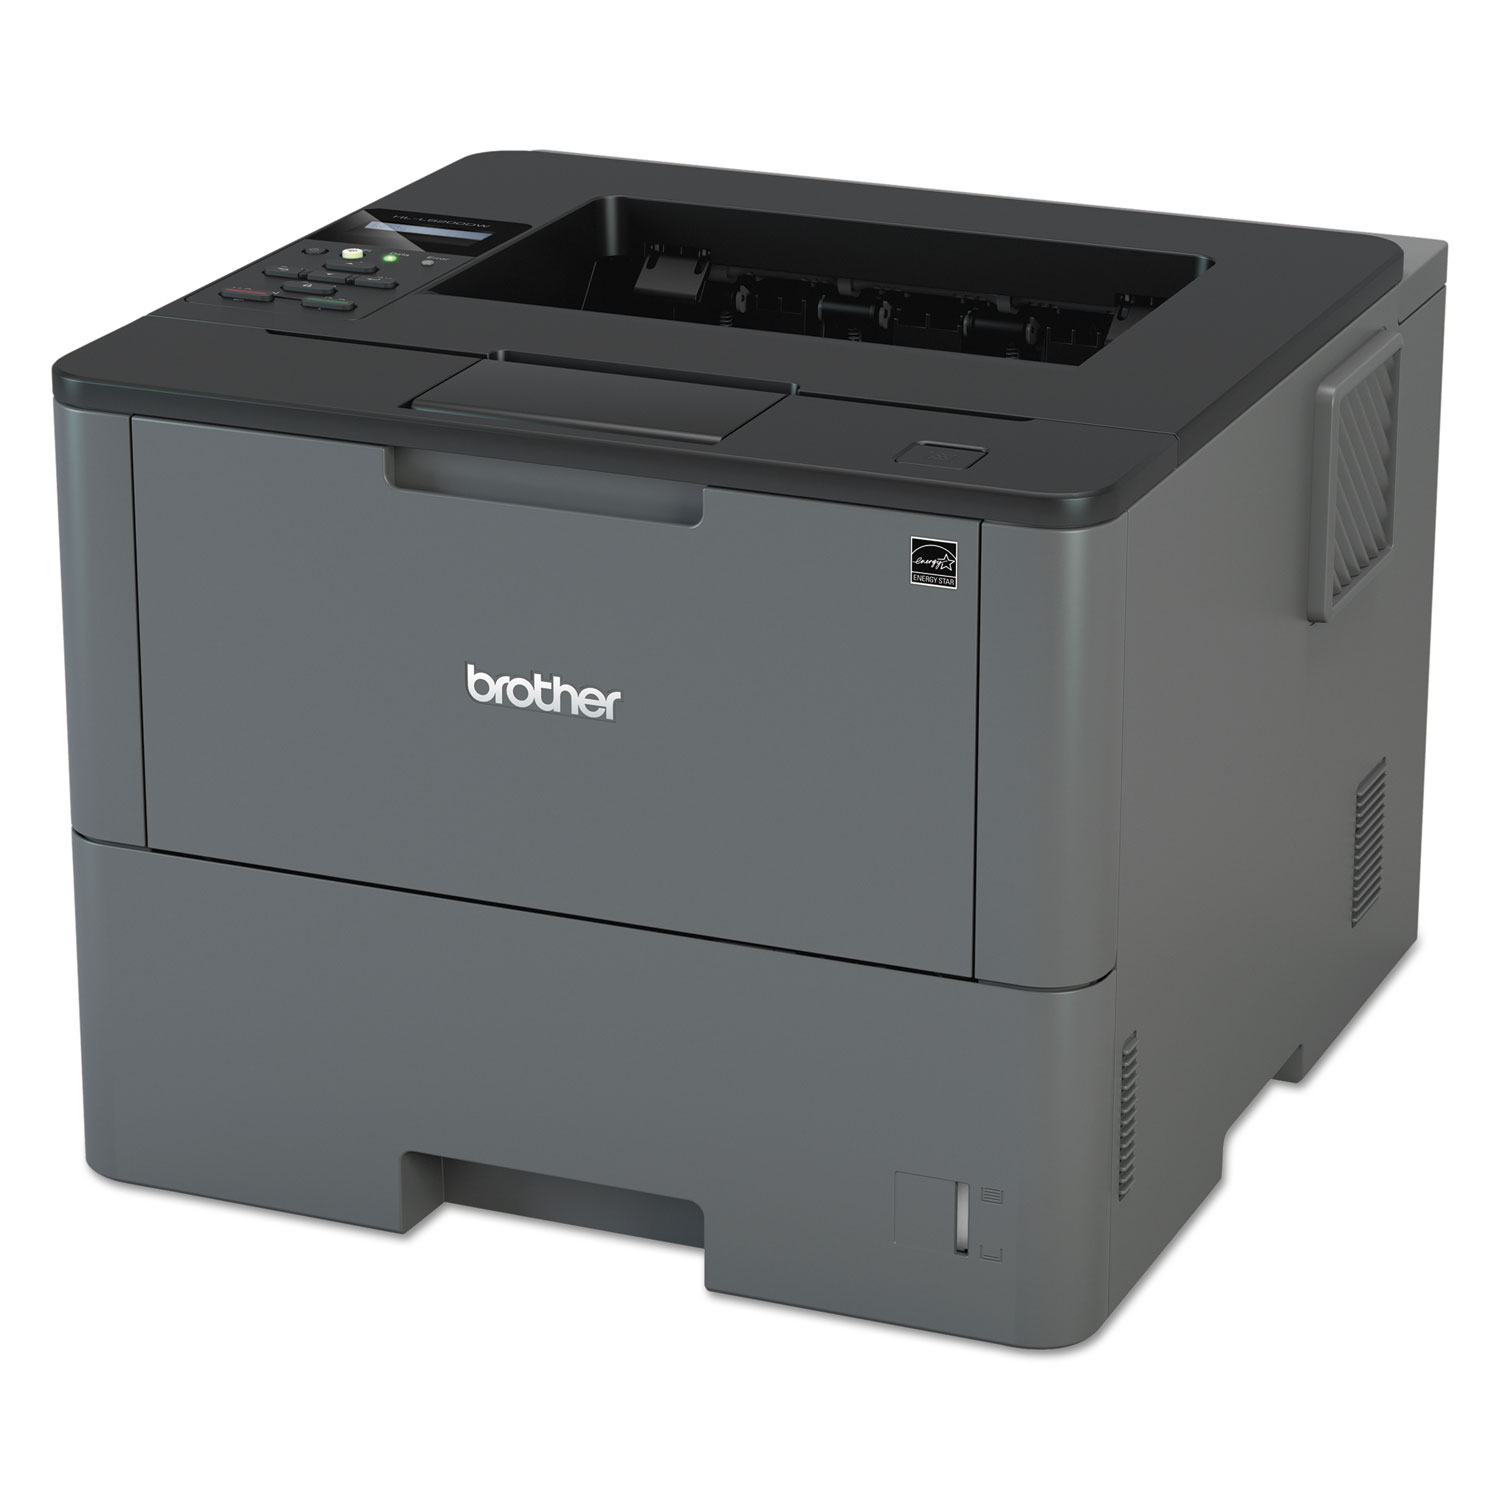 HL-L6200DW Business Monochrome Wireless Laser Printer, Automatic Duplex Printing